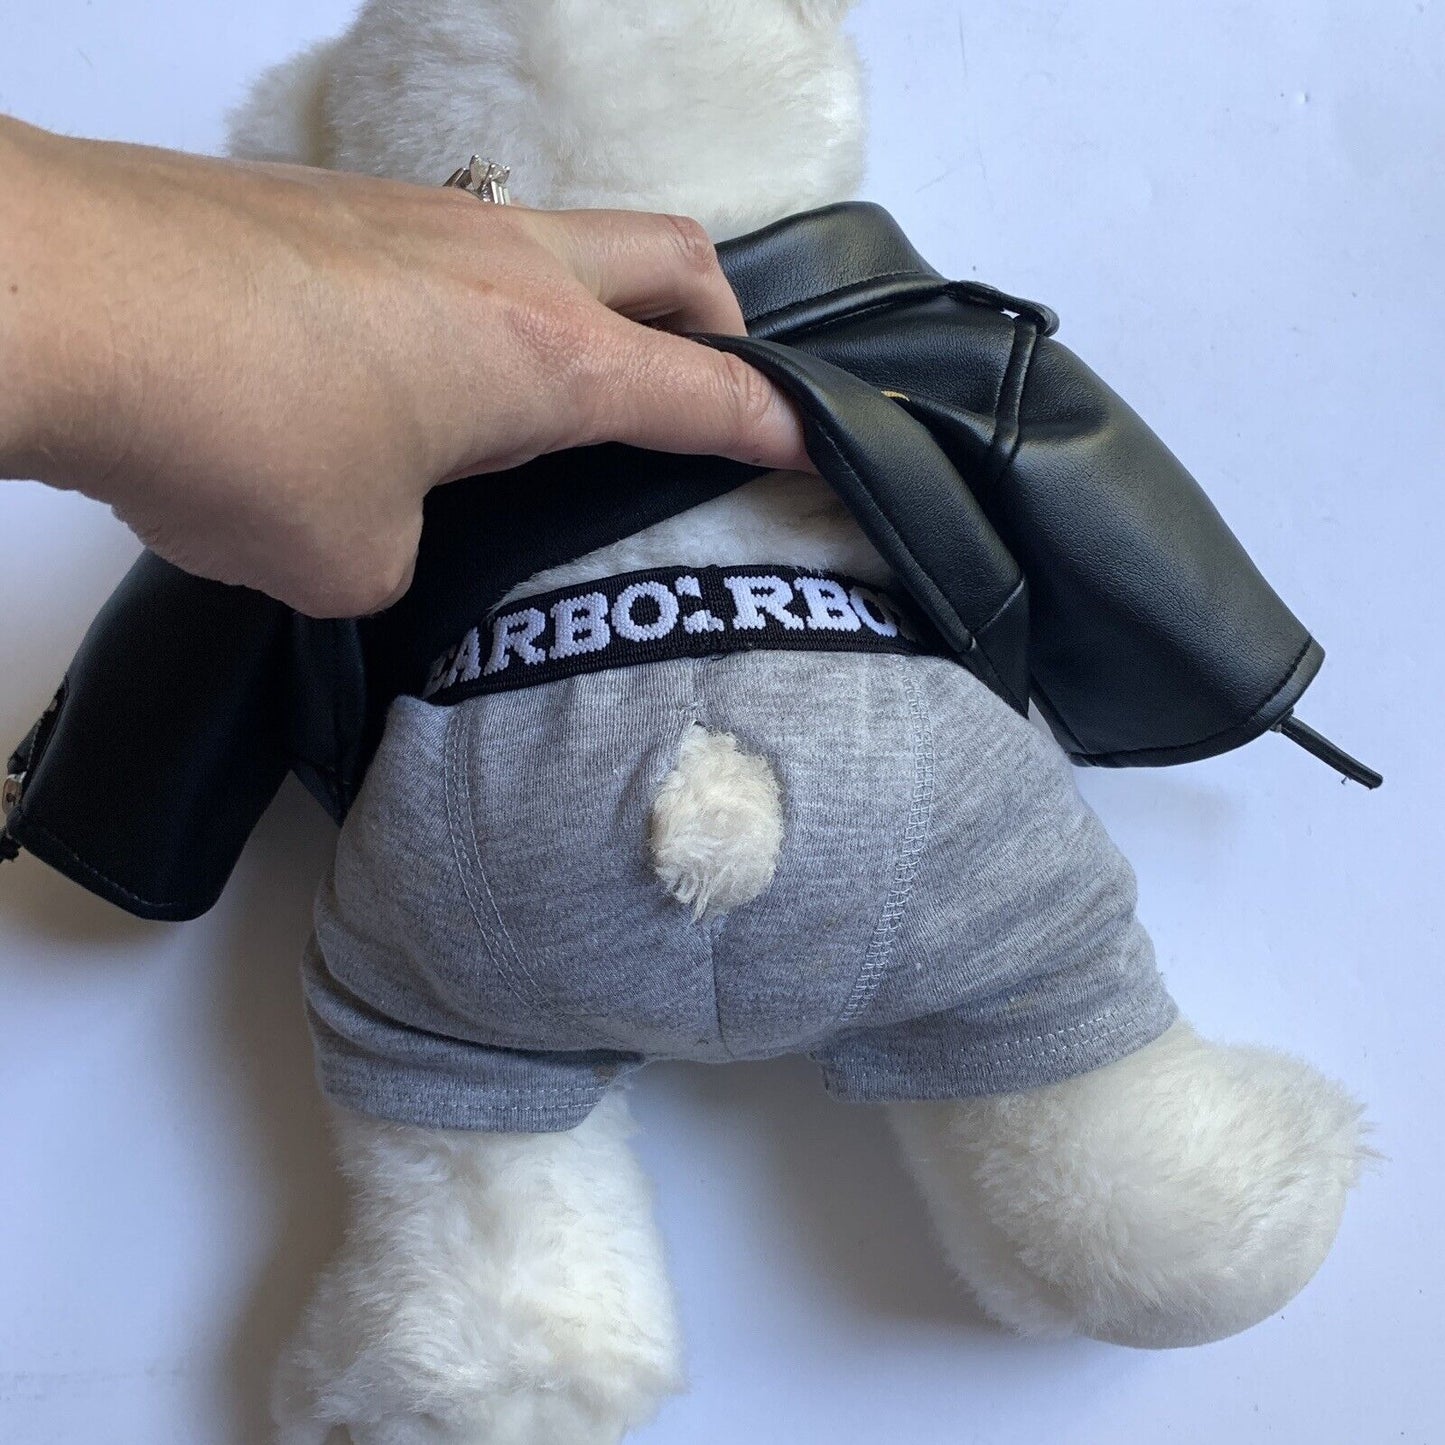 Build A Bear White Bear with Black Harley Jacket